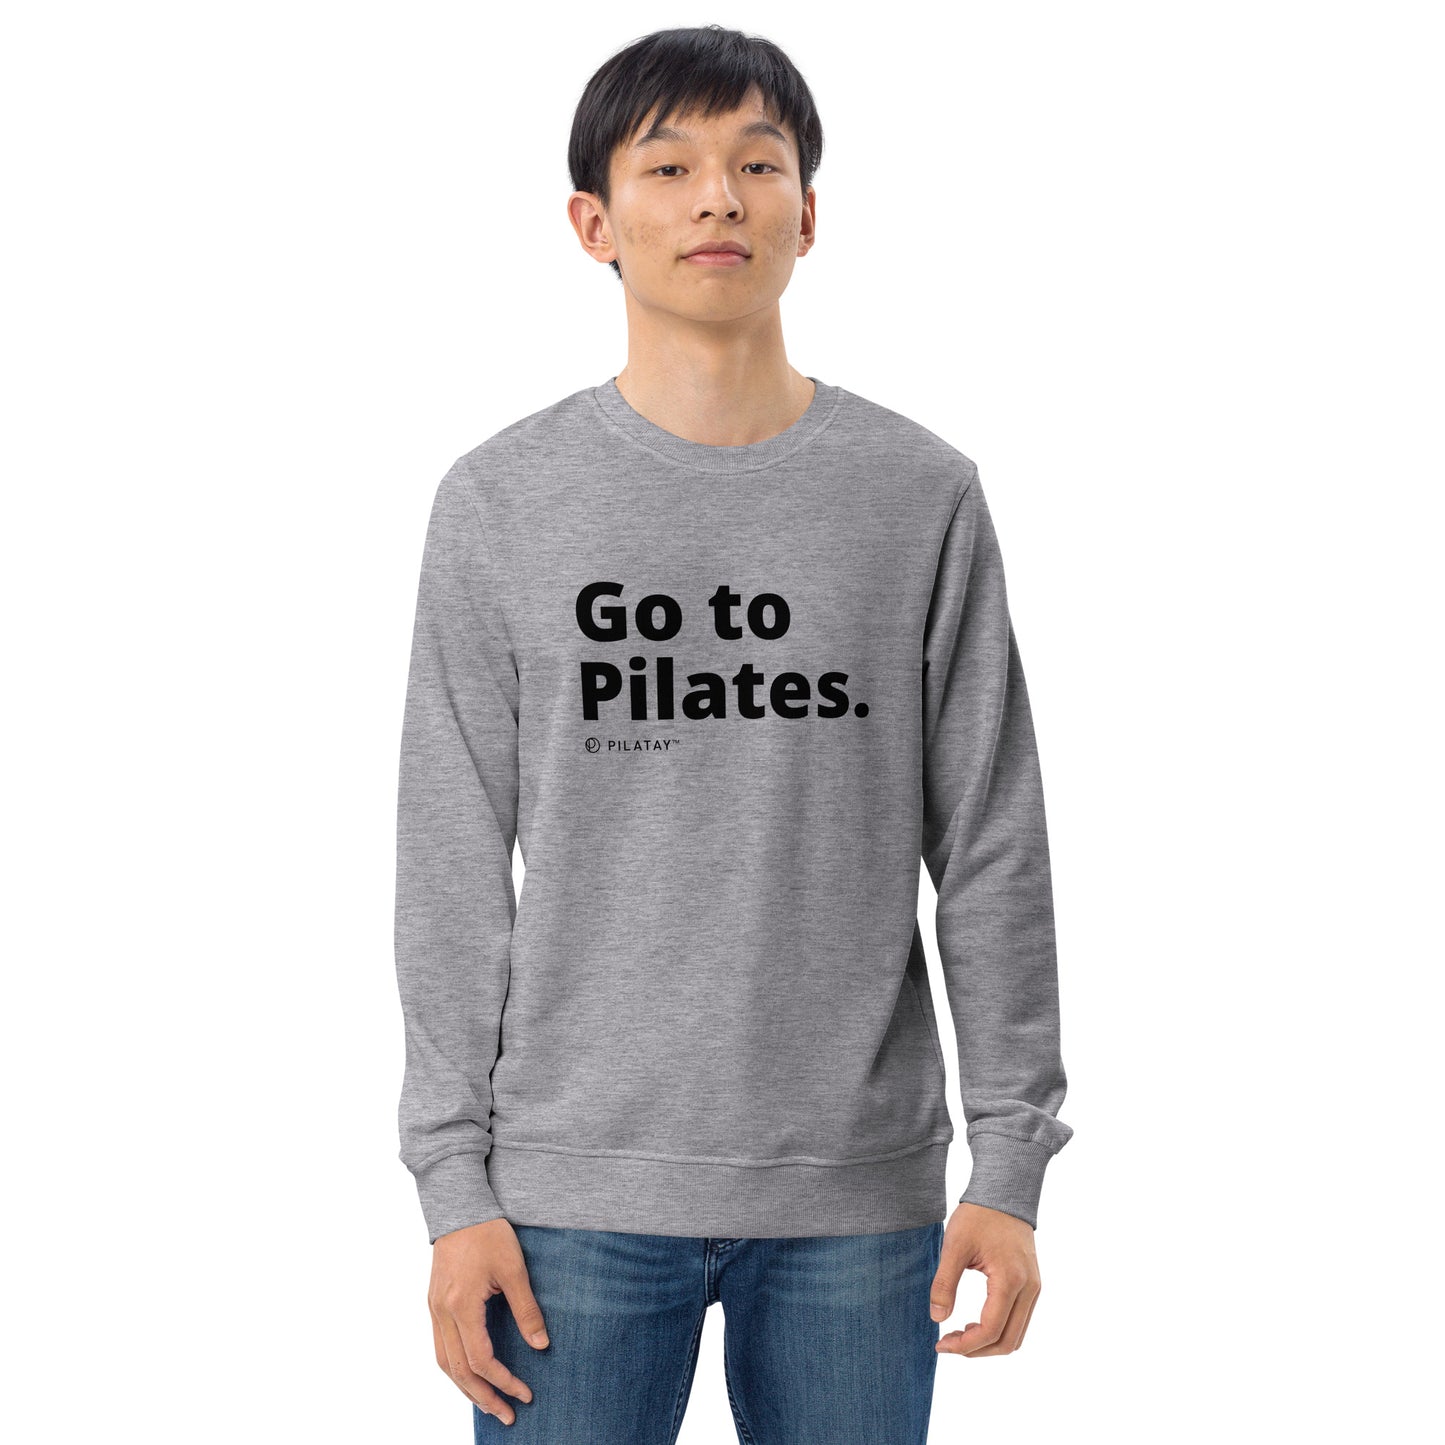 Go To Pilates - Unisex Organic Sweatshirt